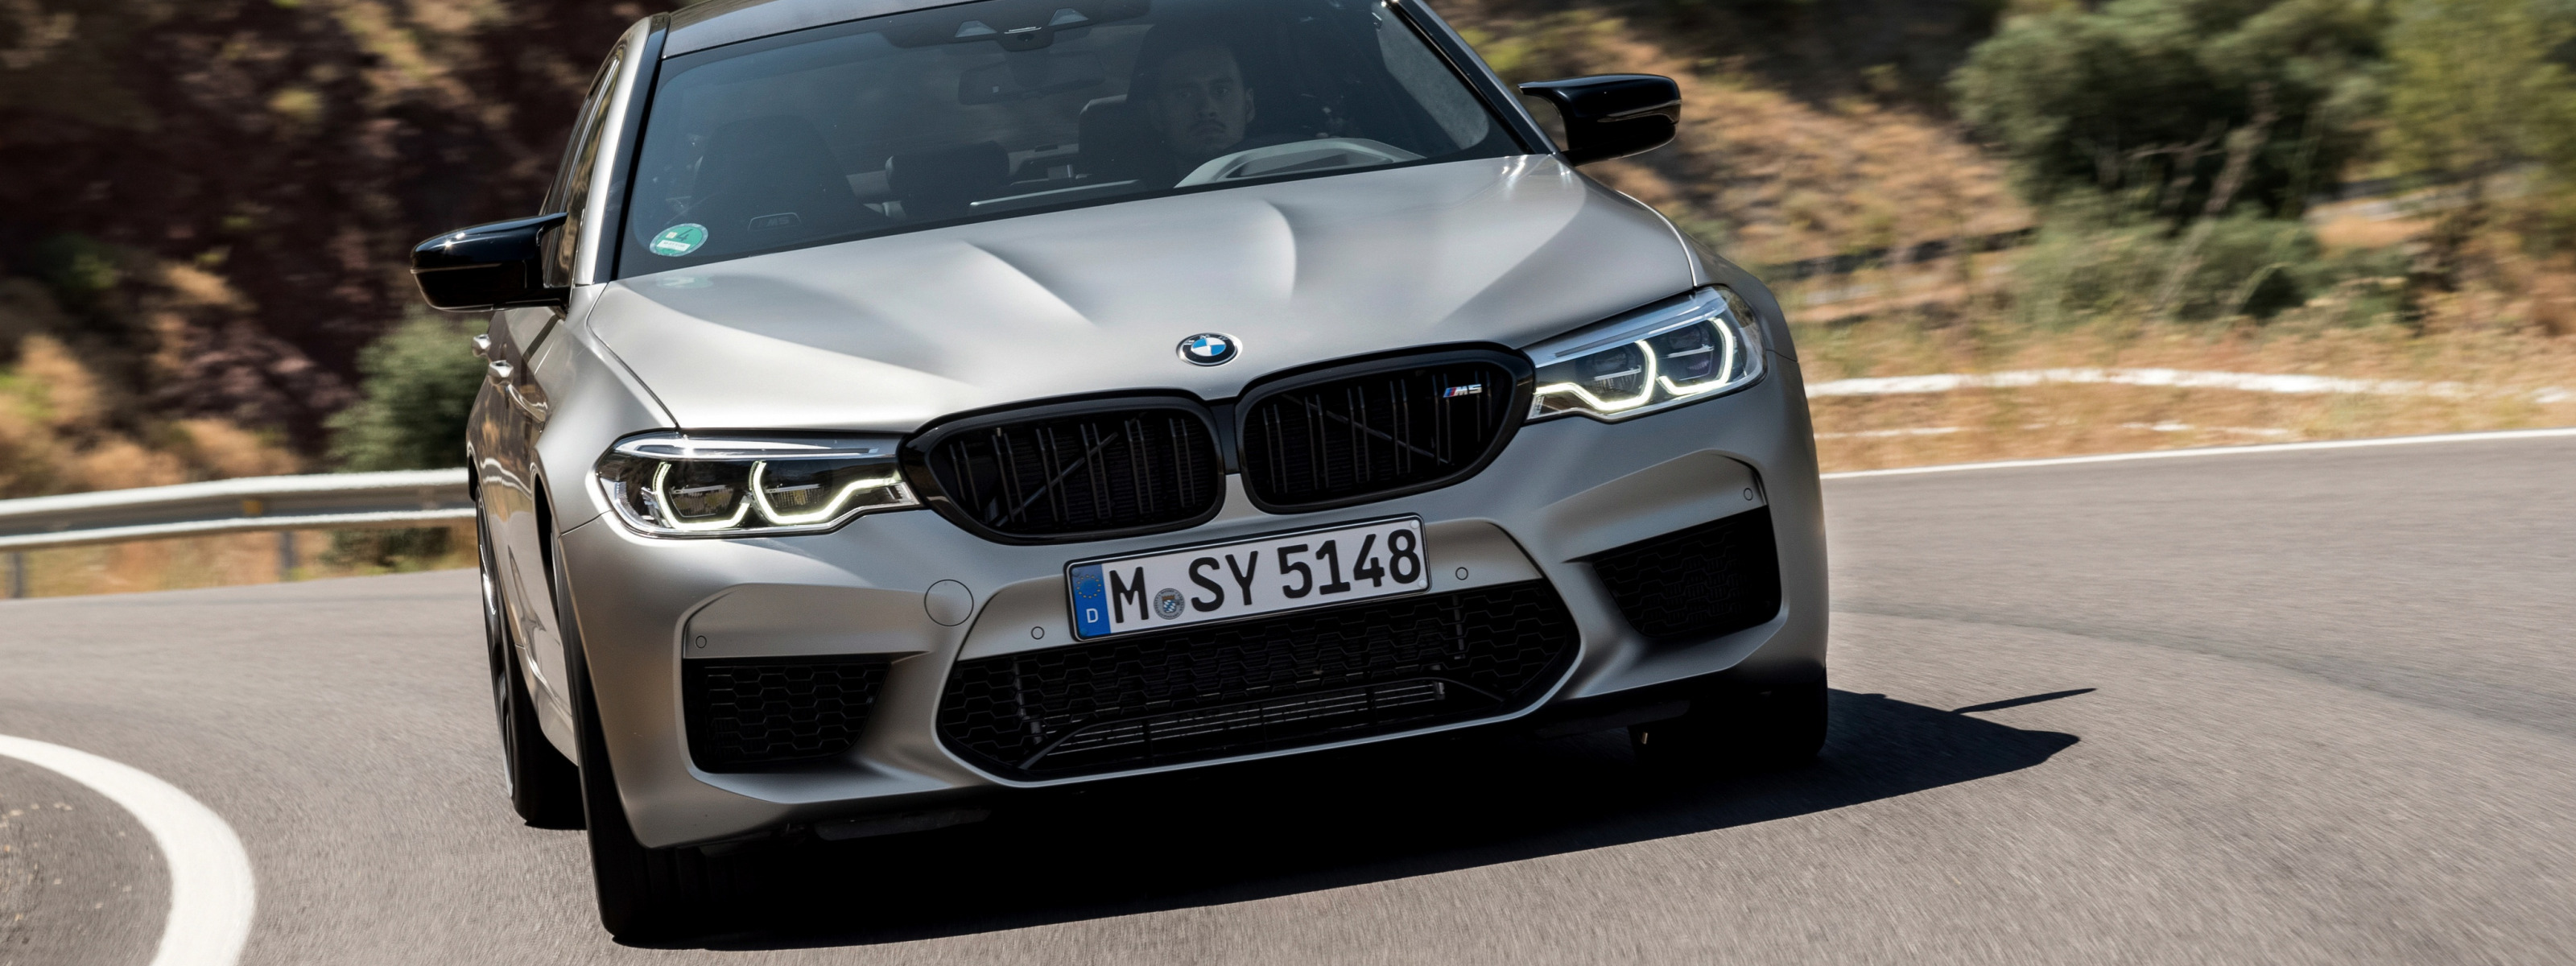 Ава м5 ф90. BMW m5 f90 Competition White. BMW m5 f90 CS. BMW m5 f90 rest 2021. BMW m5 f90 с люком.